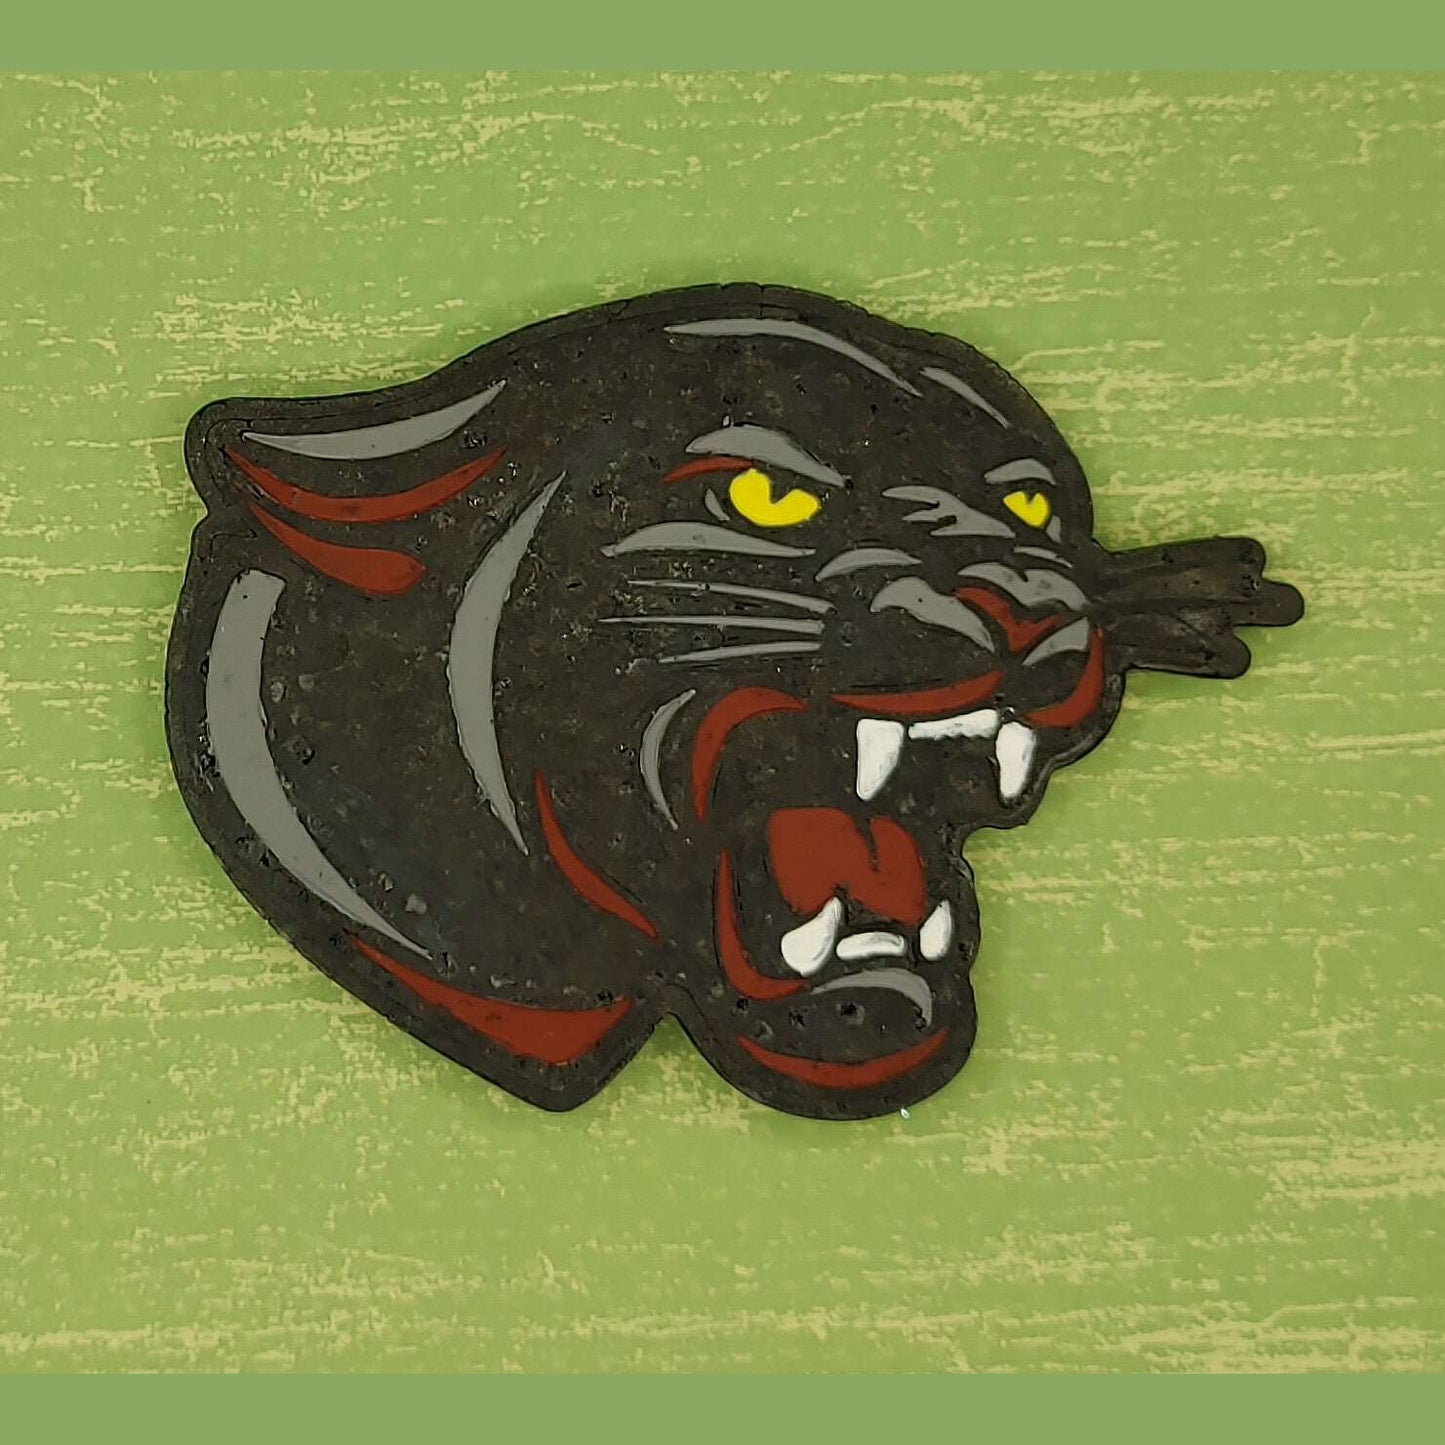 Panther Bobcat Cougar Wildcat Bearcat School Mascot - Silicone Freshie Mold